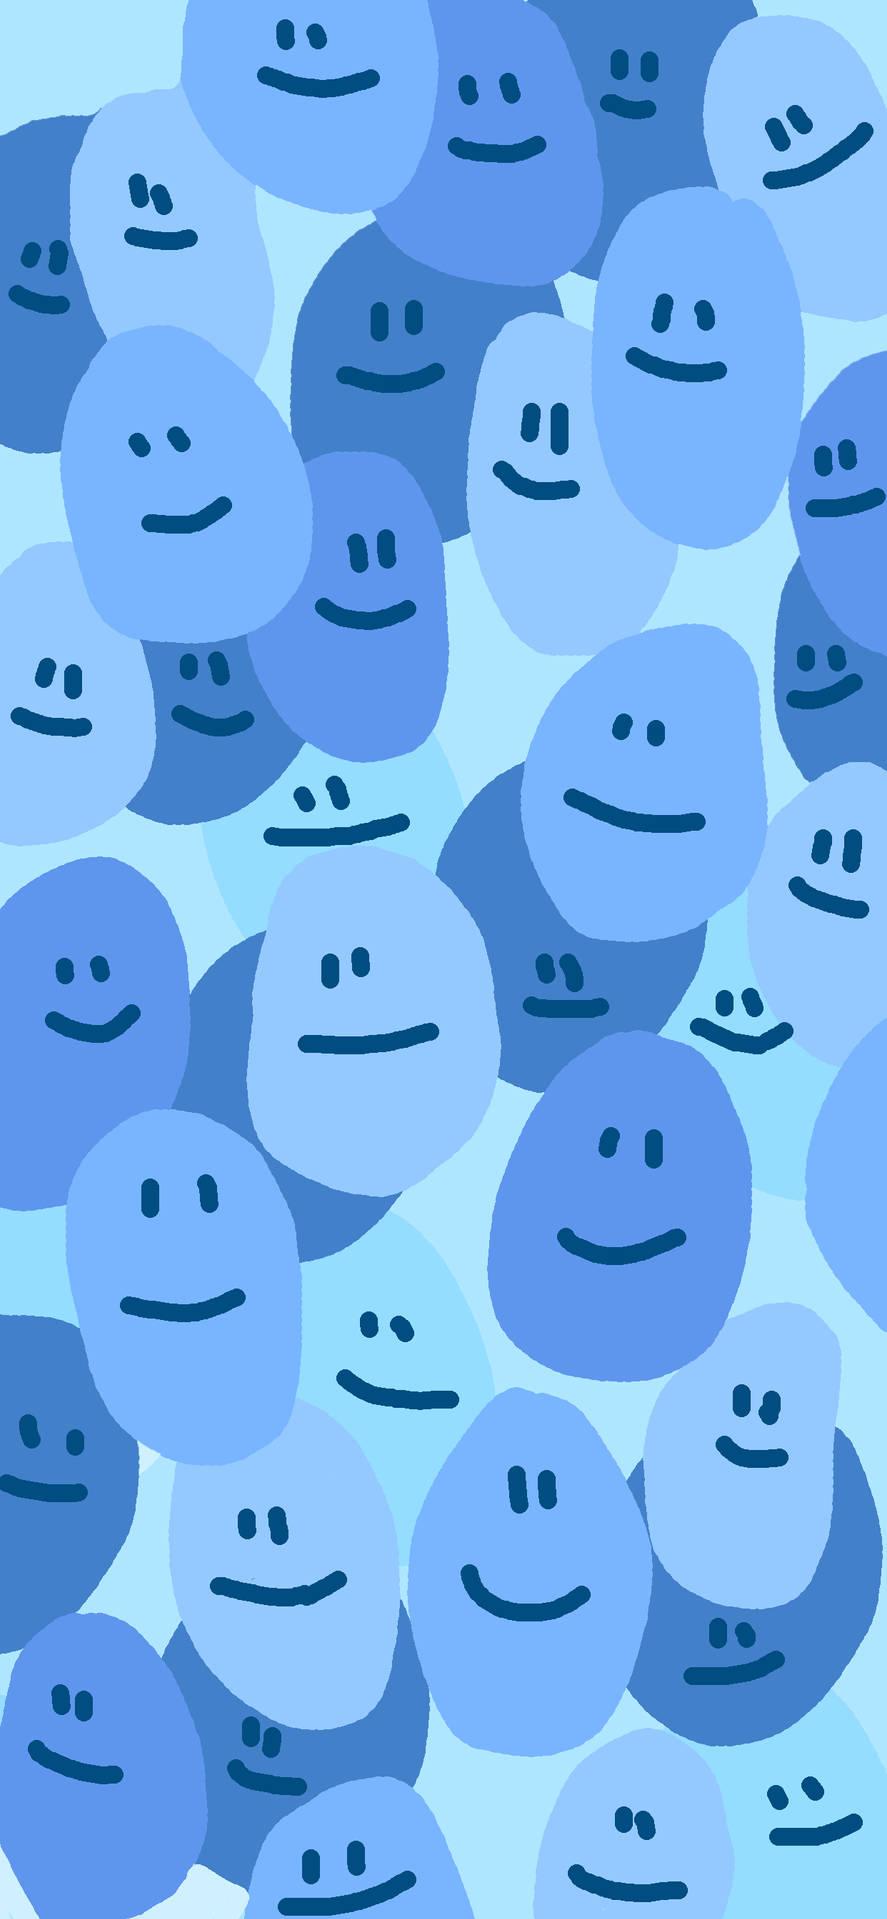 Download Preppy Smiley Face Blue Oblongs Wallpaper